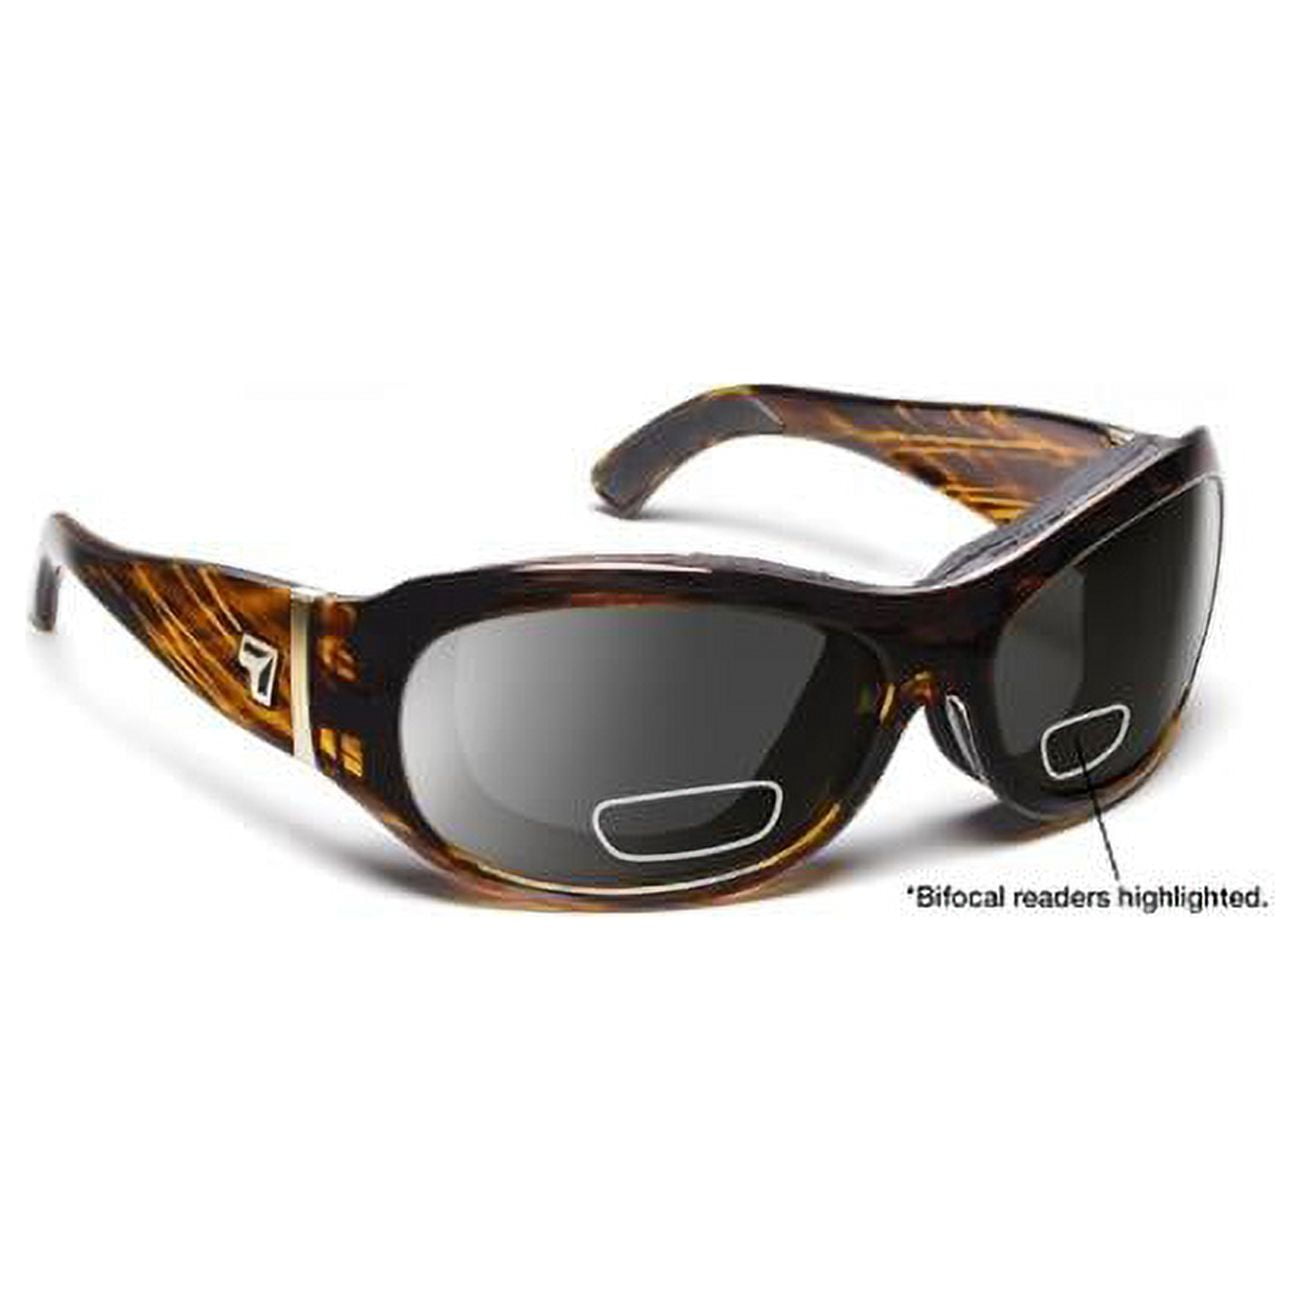 7eye 310641F Briza Sharp View Gray Plus 2.50 Reader Sunglasses- Sunset  Tortoise - Small & Large 